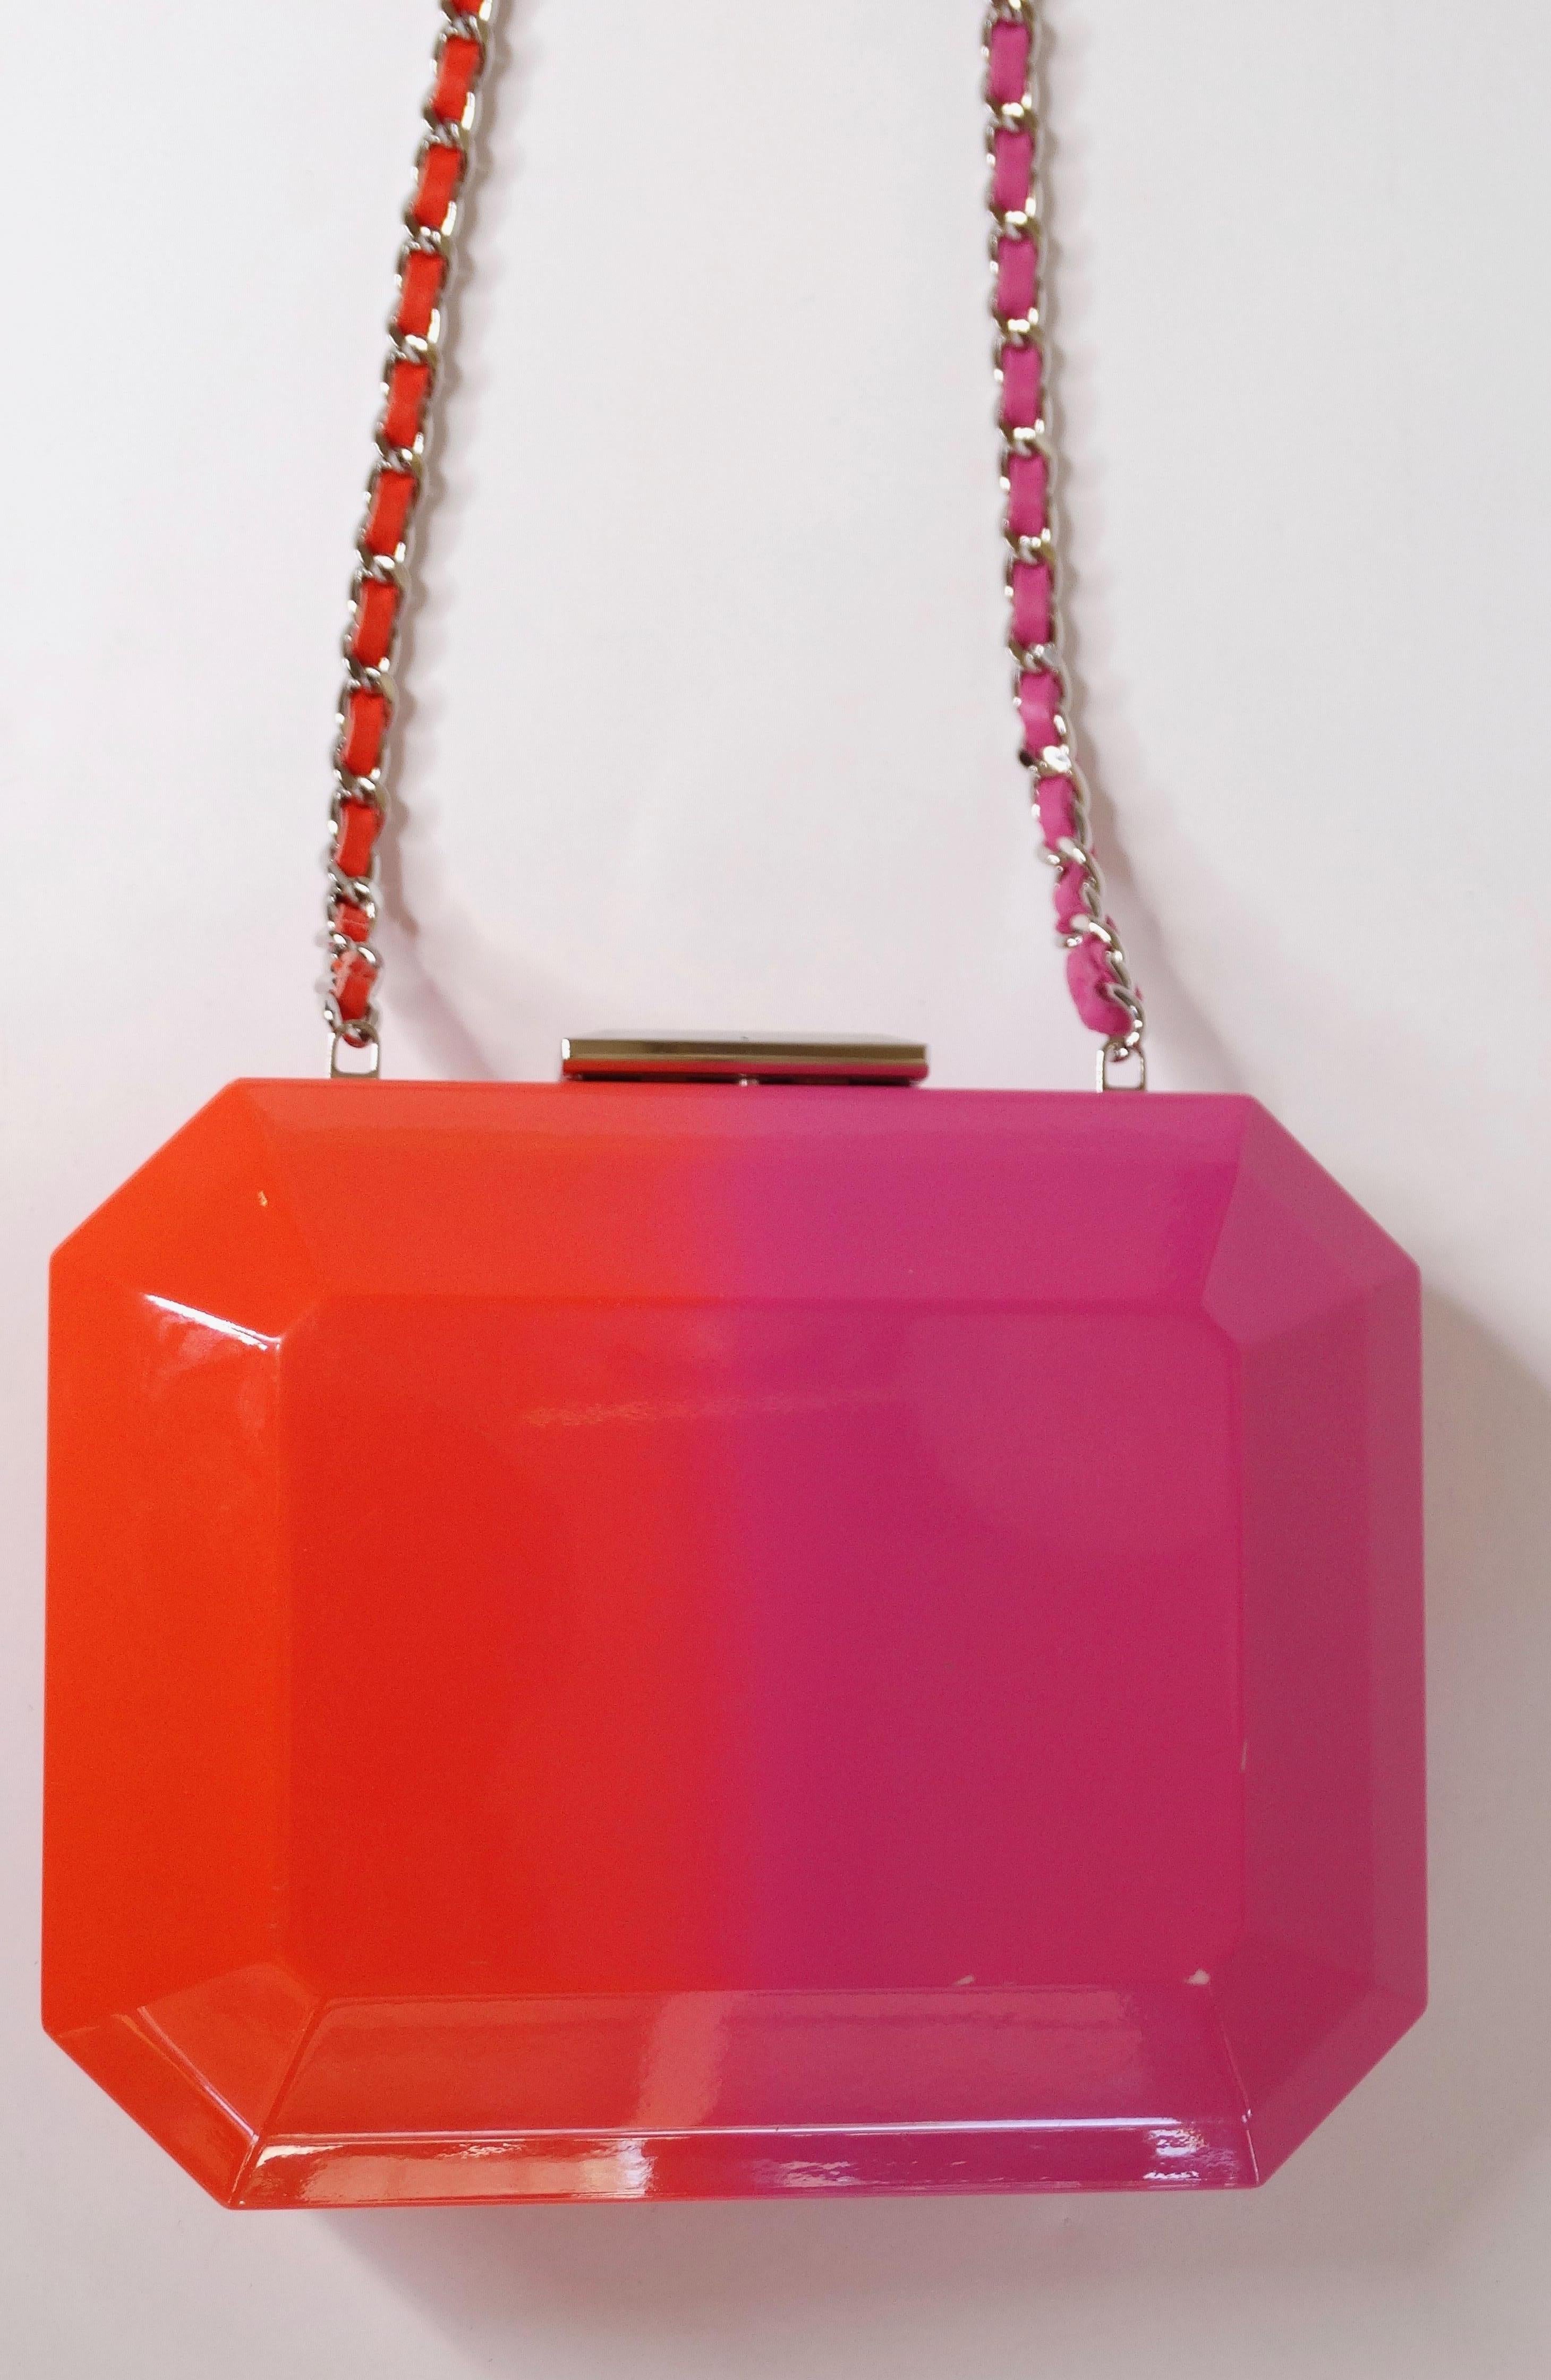 Chanel Runway Minaudière Ombre Pink & Orange Hard Shell Handbag 1